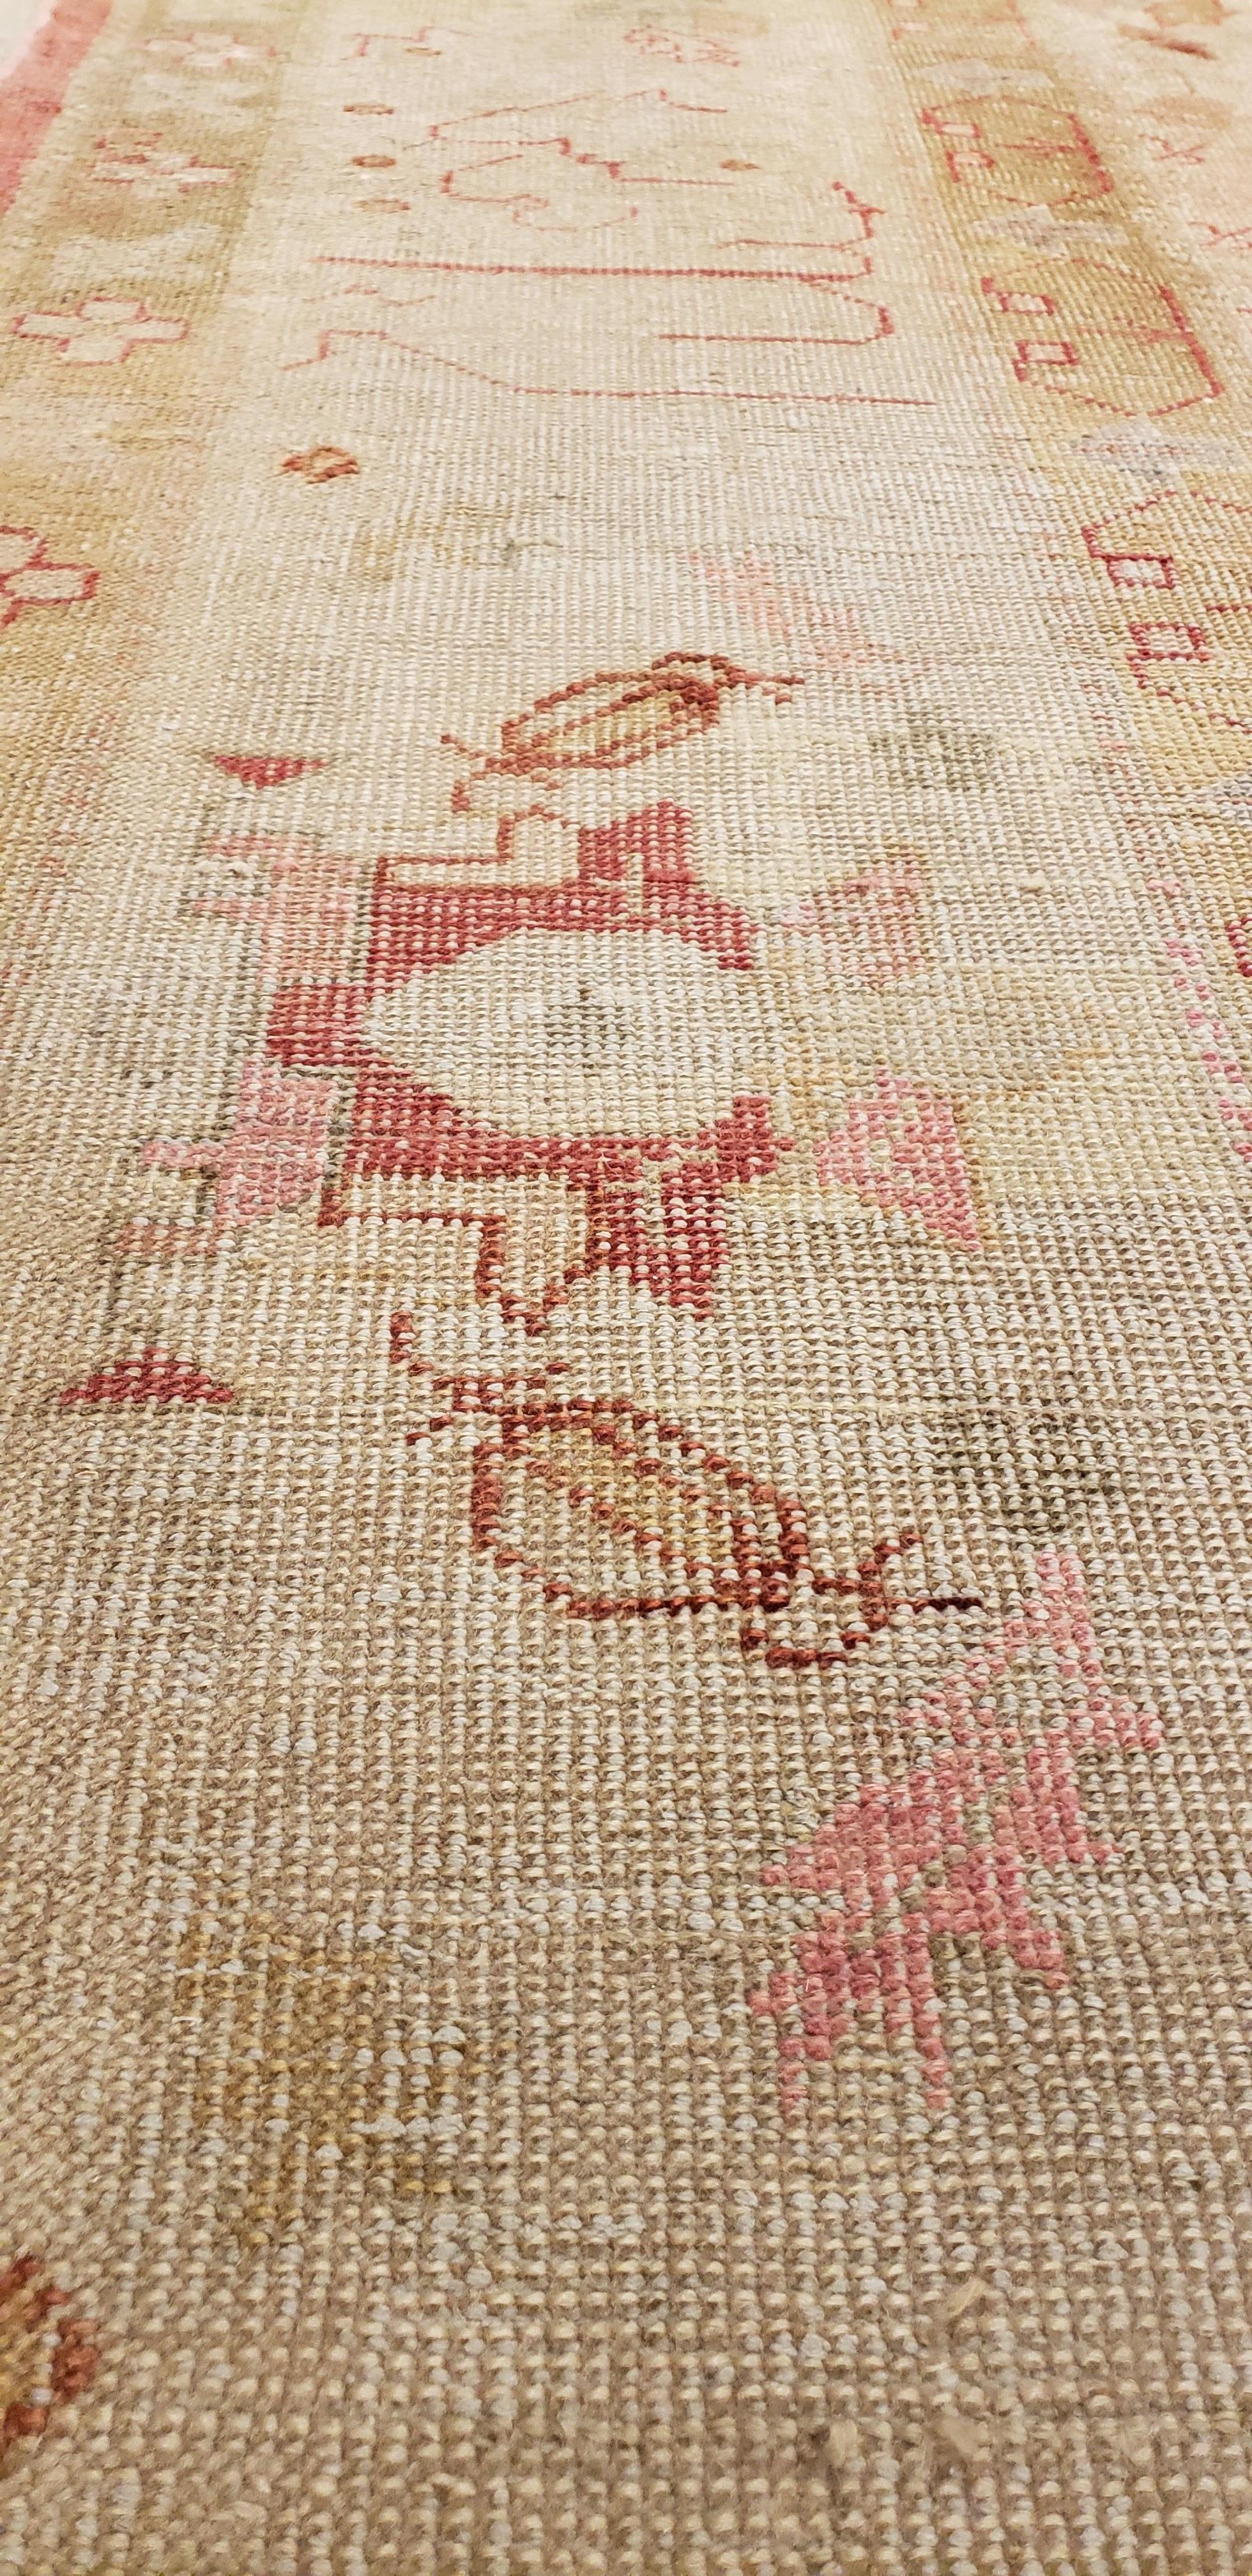 Antique Oushak Carpet, Handmade Turkish Oriental Rug, Beige, Coral, Soft Colors For Sale 5